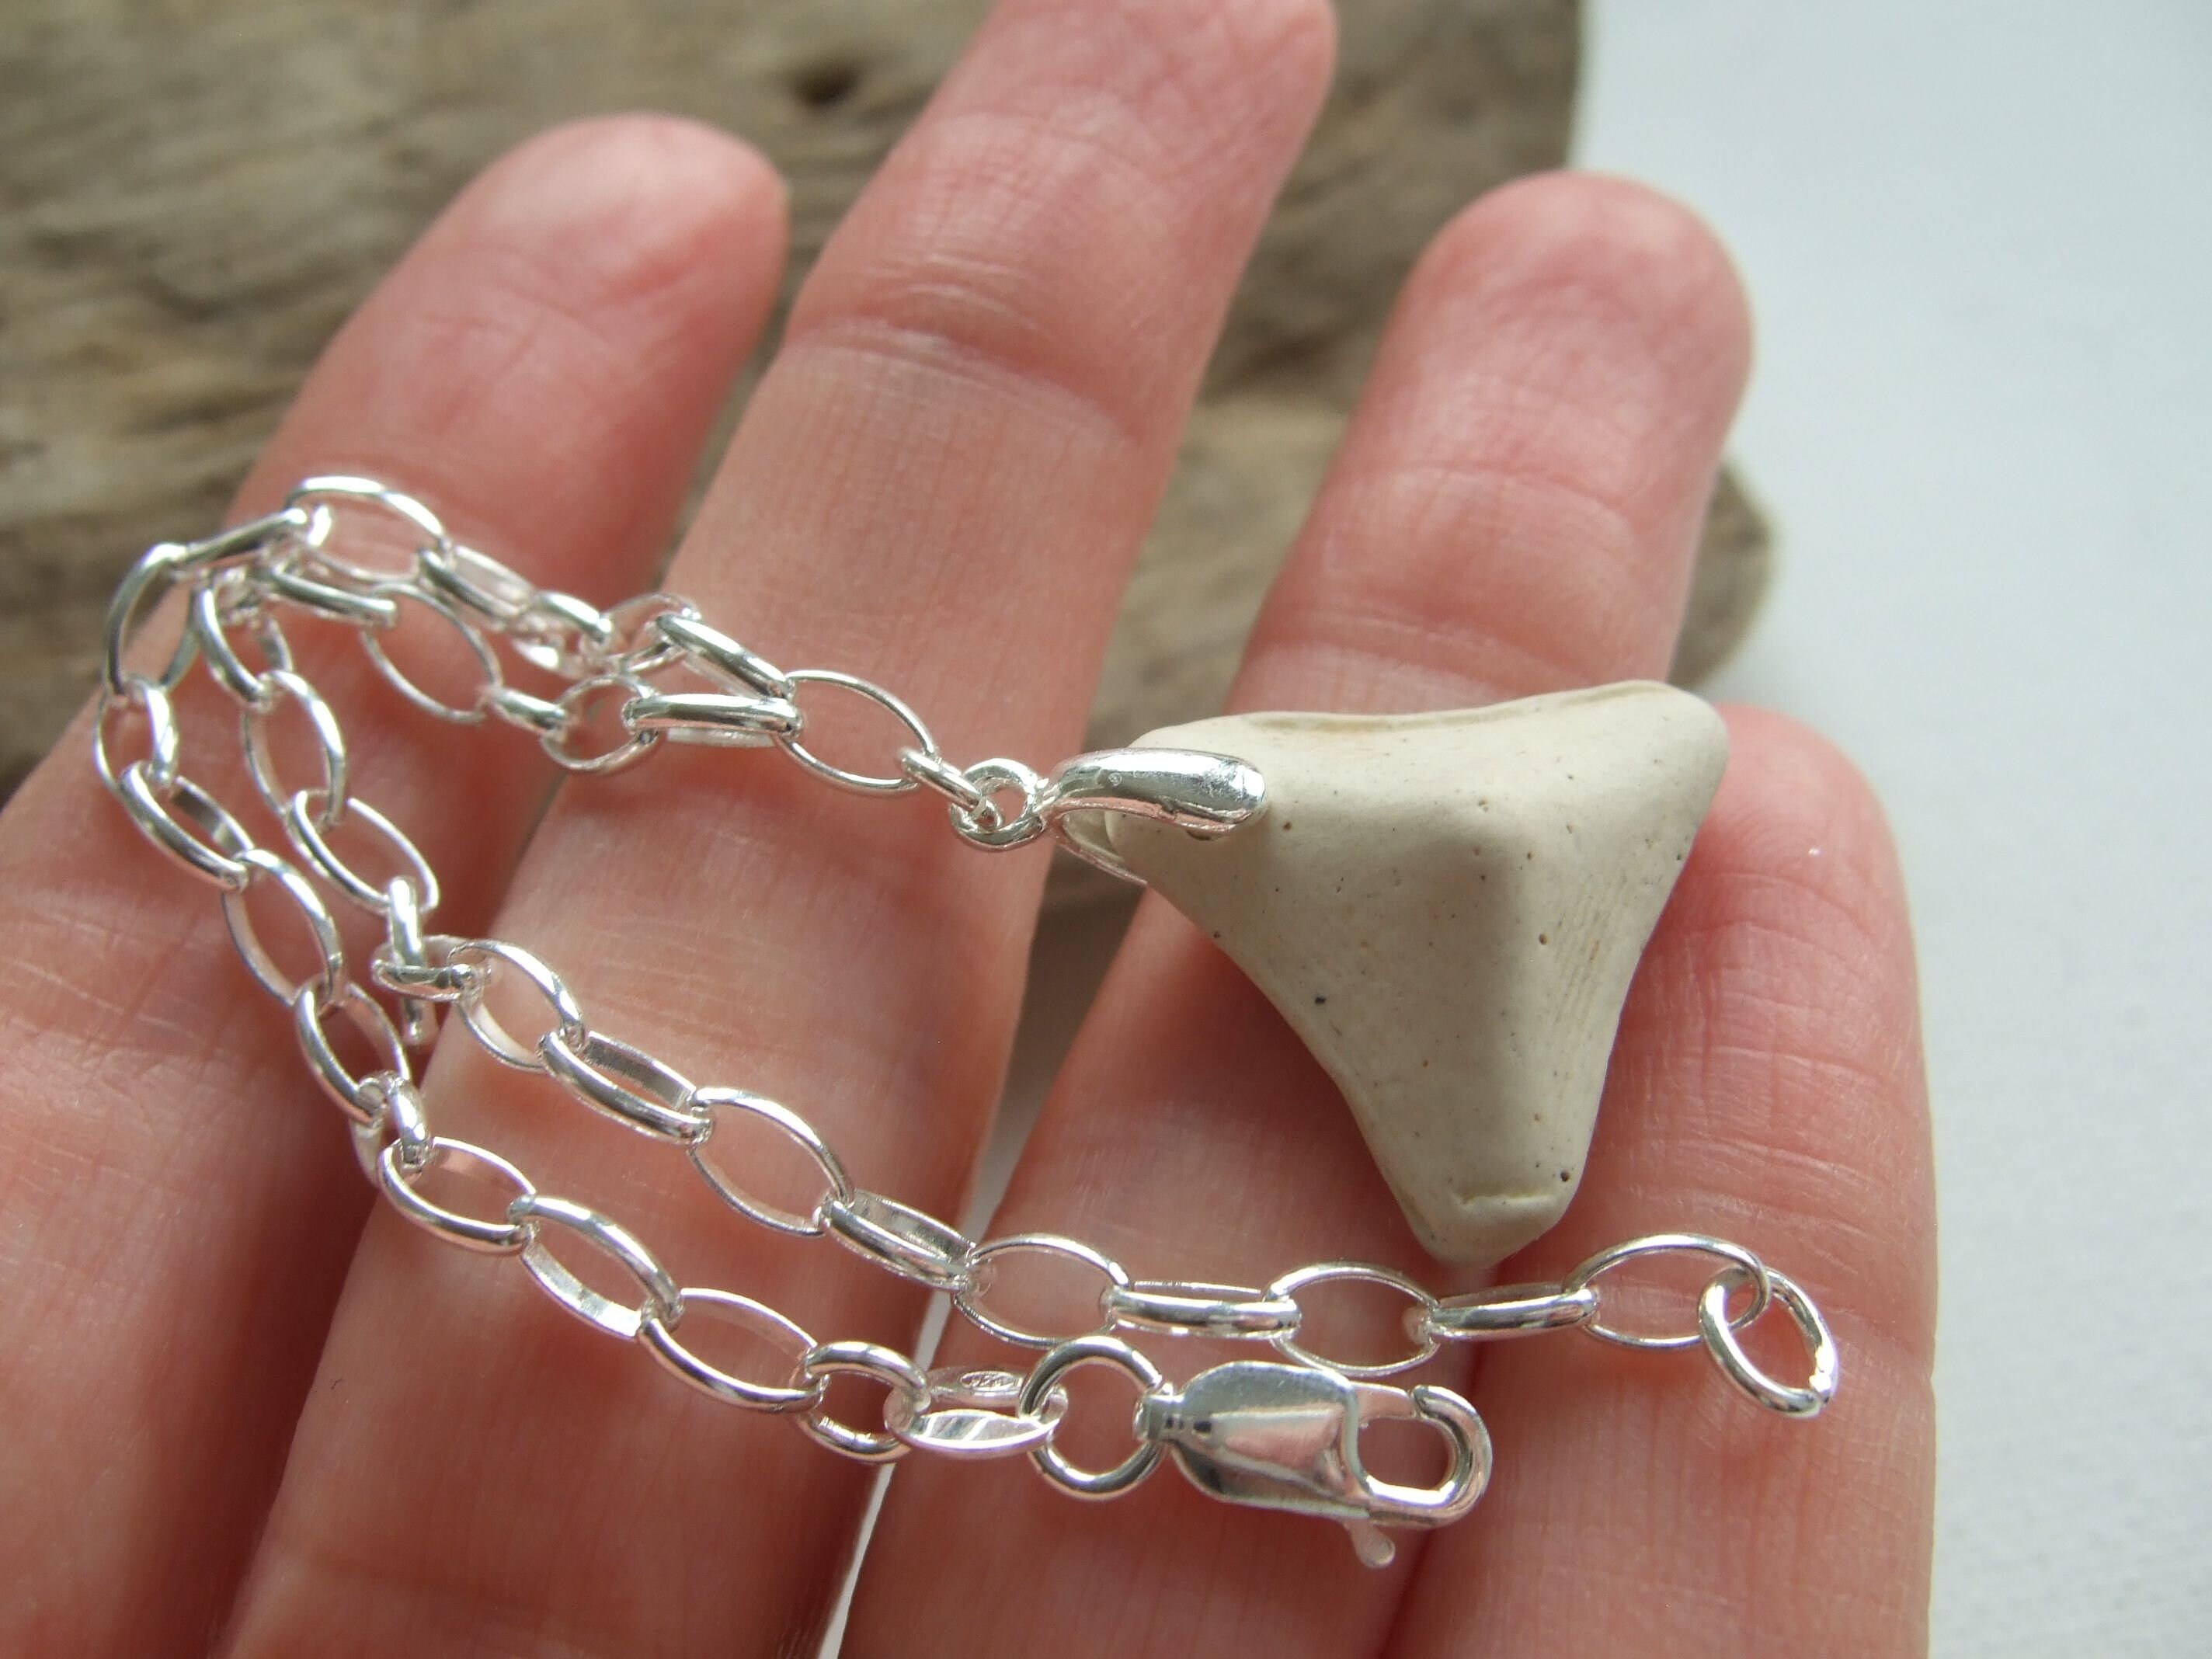 Ceramic piece bracelet with silver charms